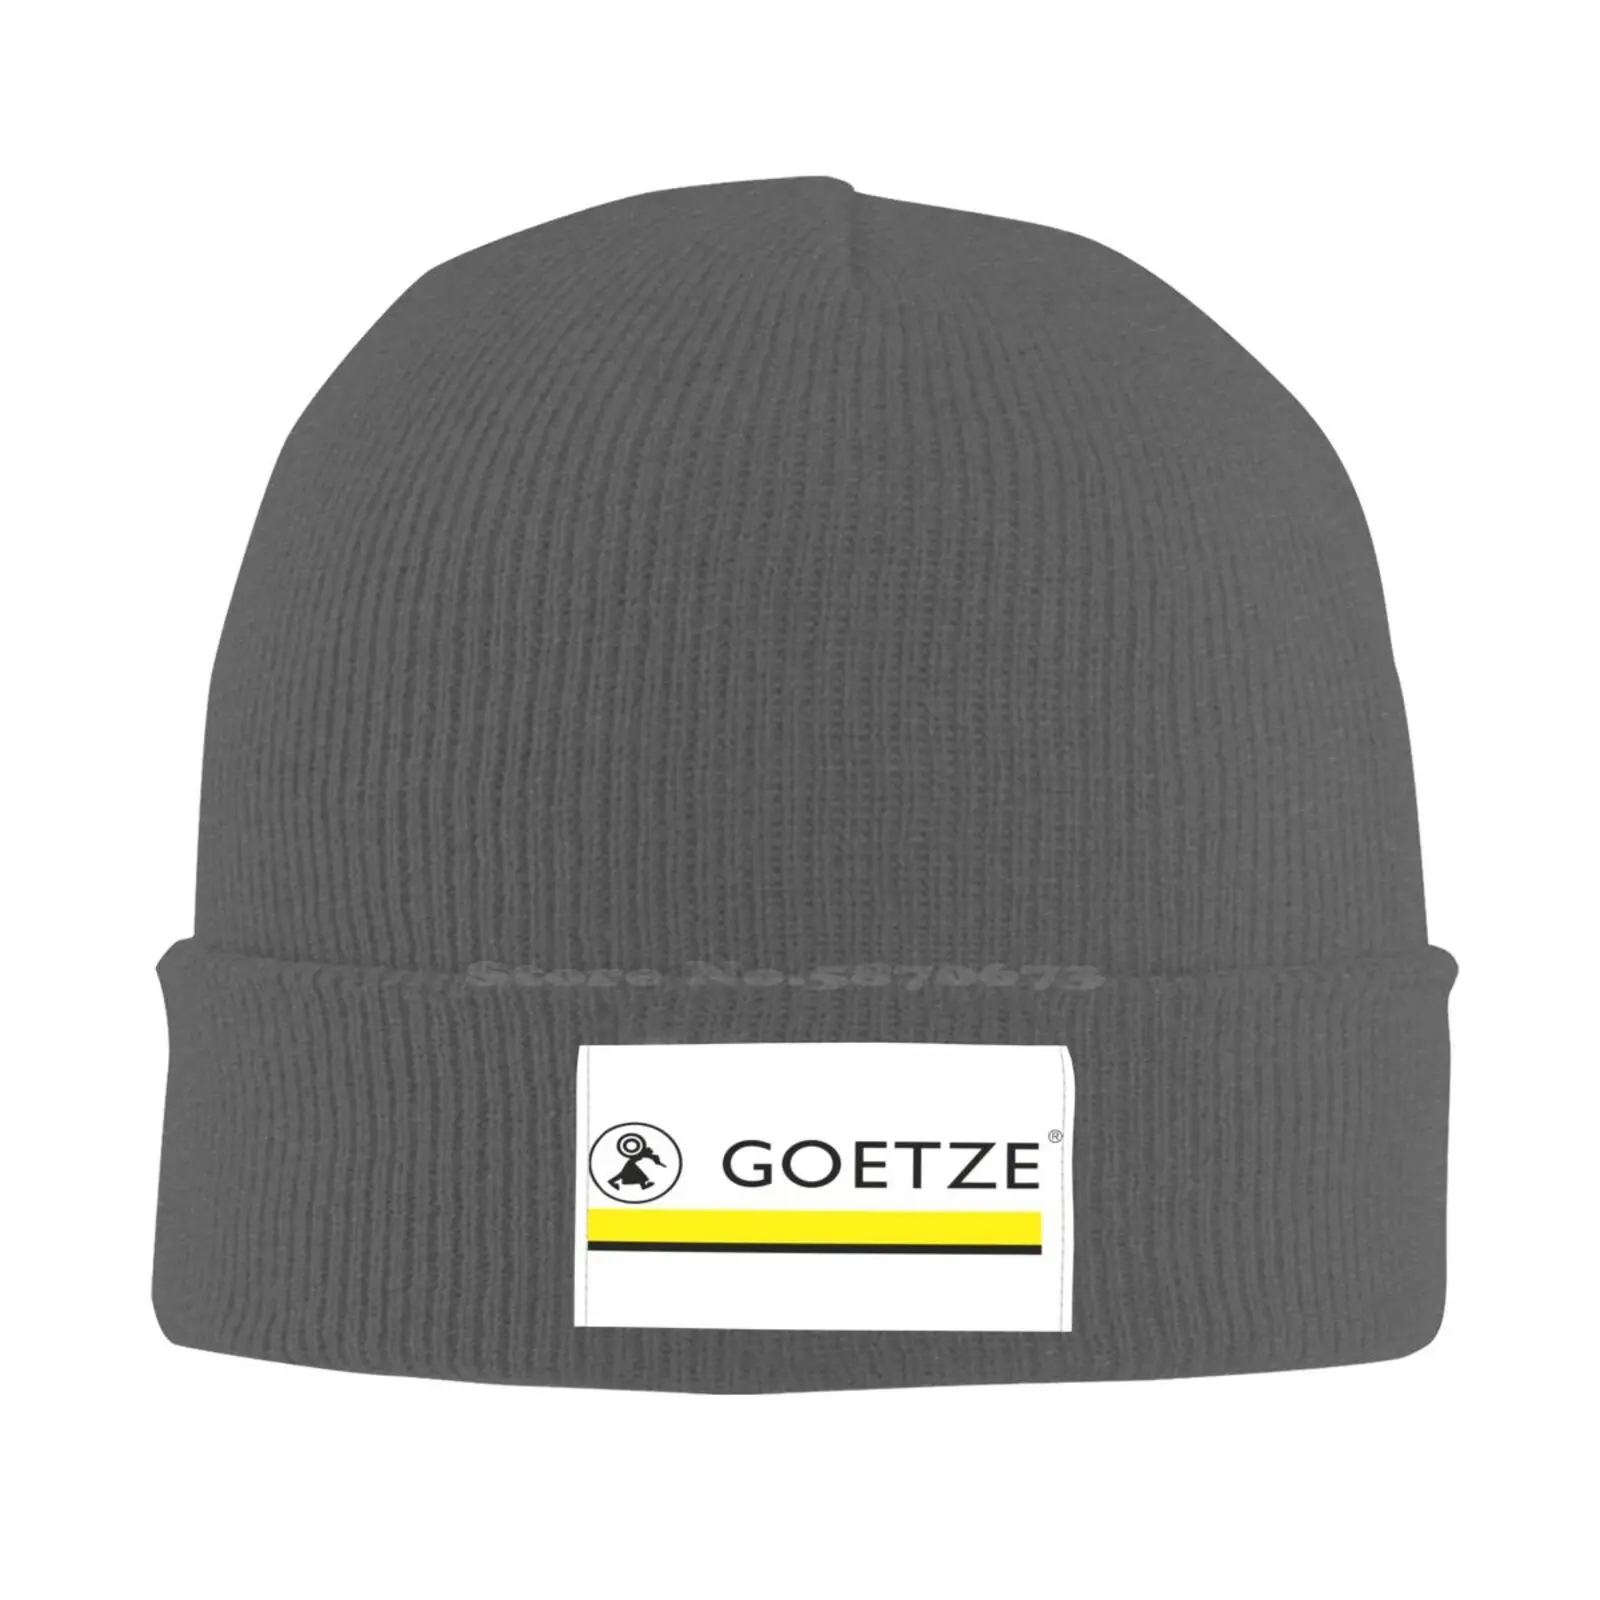 

Goetze от Federal-Mogul Motorparts, модная кепка с логотипом, качественная бейсболка